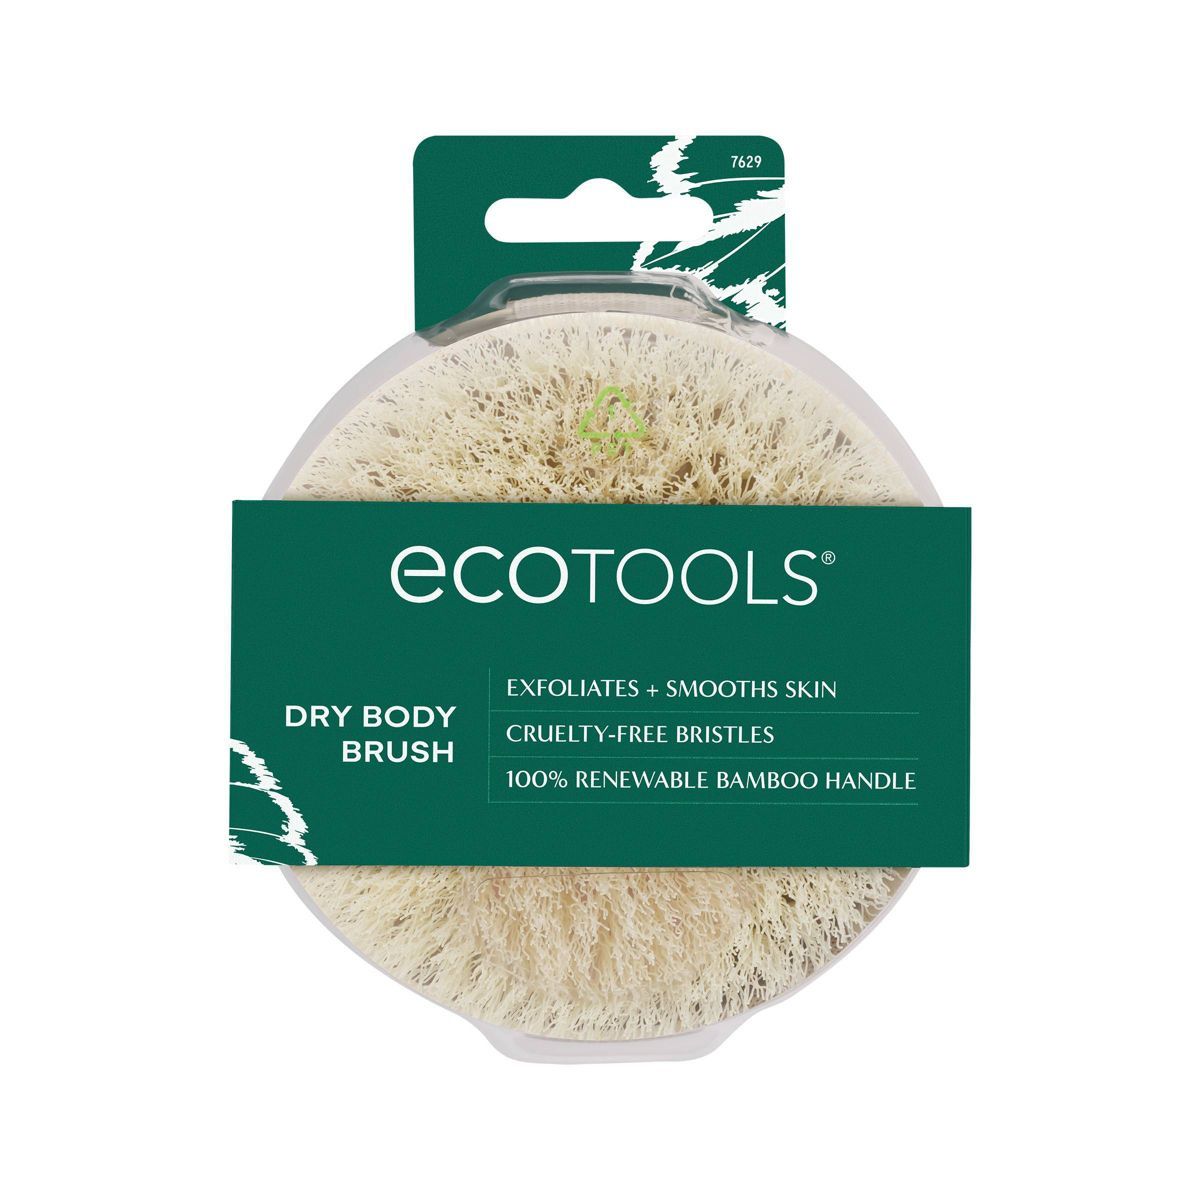 EcoTools Dry Body Brush | Target